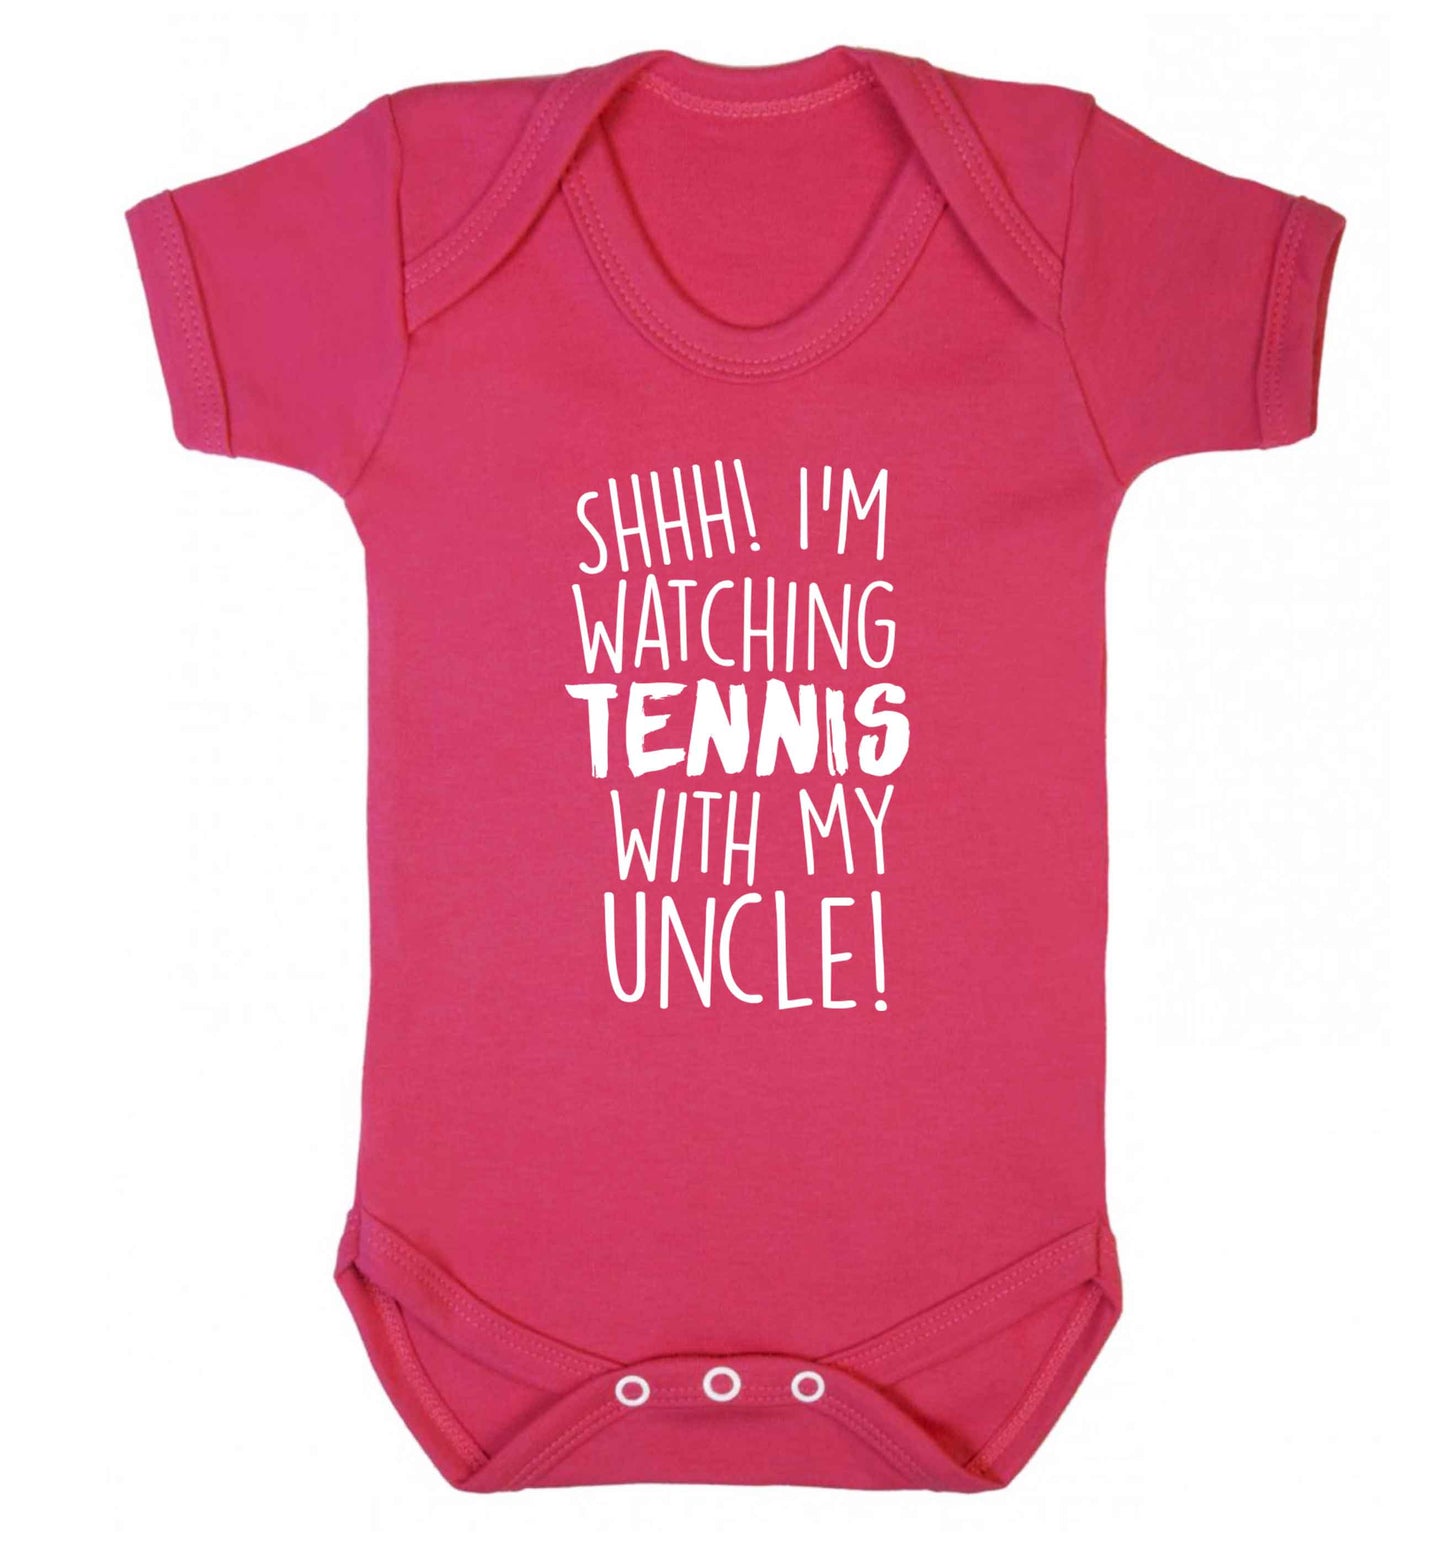 Shh! I'm watching tennis with my uncle! Baby Vest dark pink 18-24 months